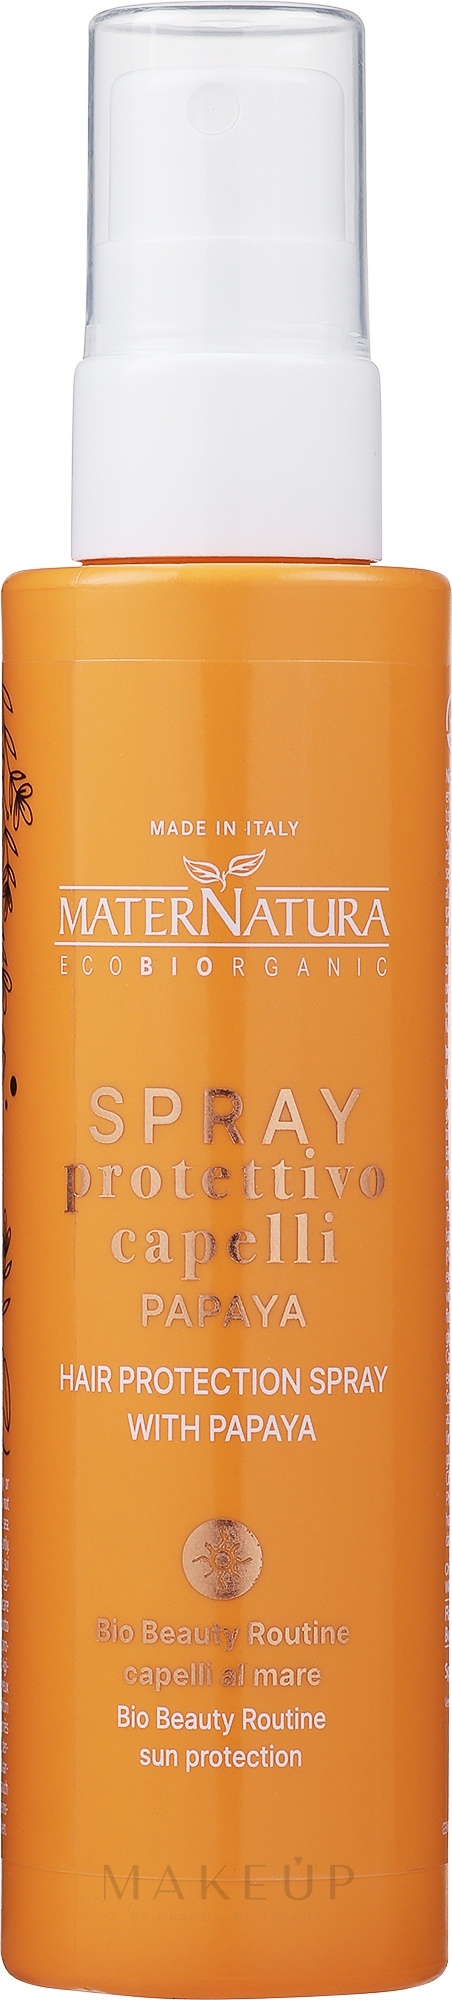 MaterNatura Hair Protection Spray With Papaya